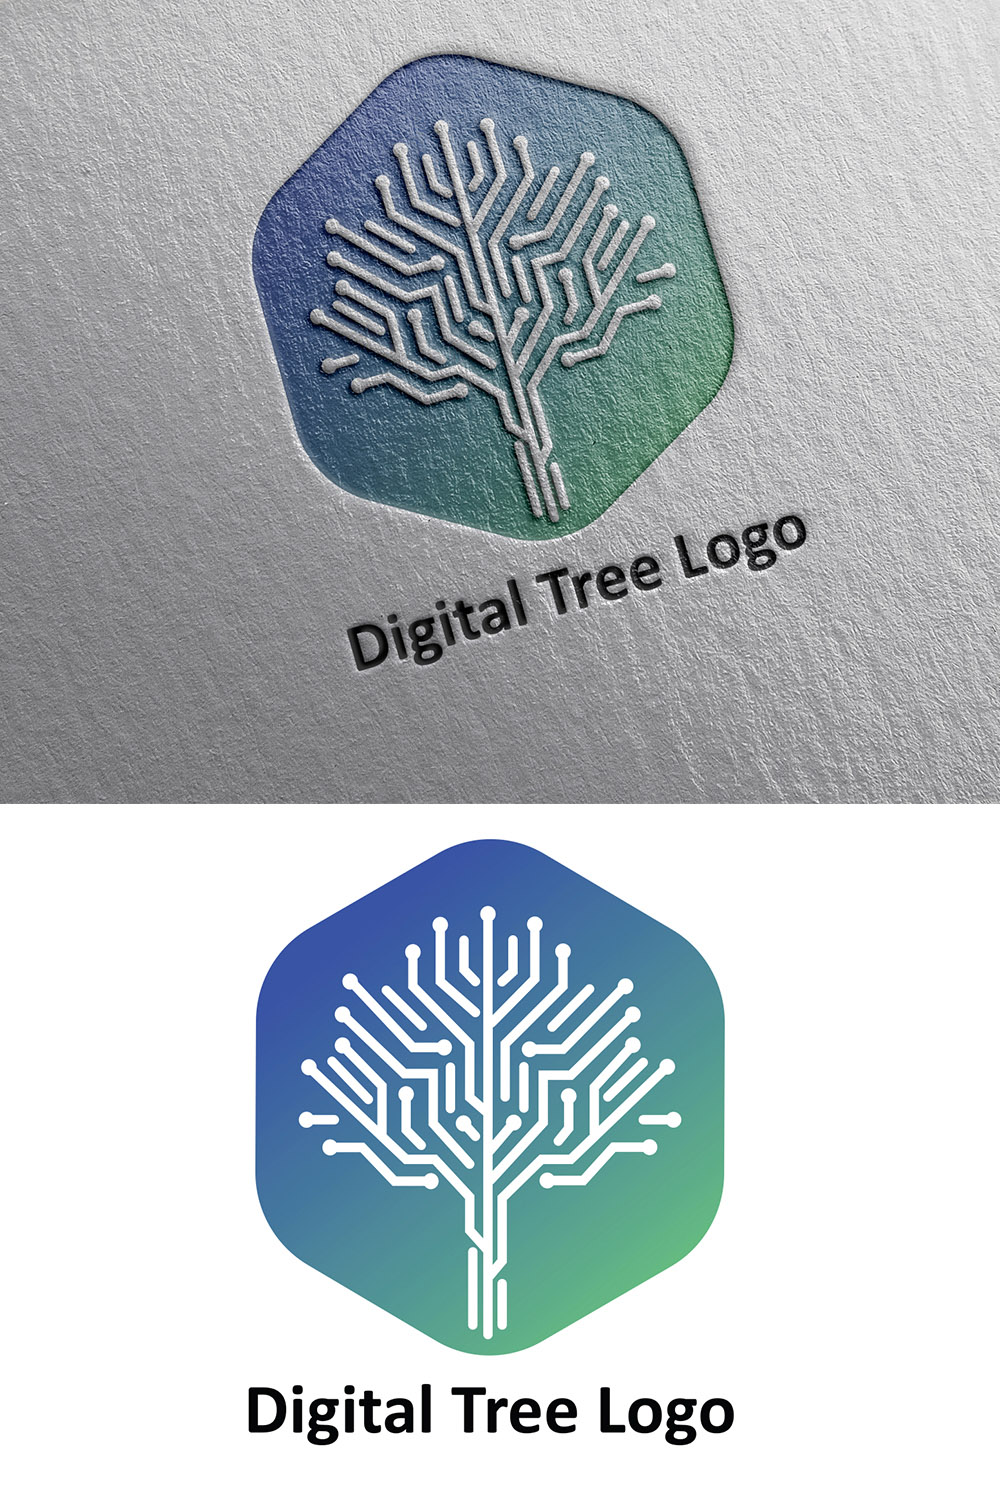 Digital Tree Logo Pinterest image.